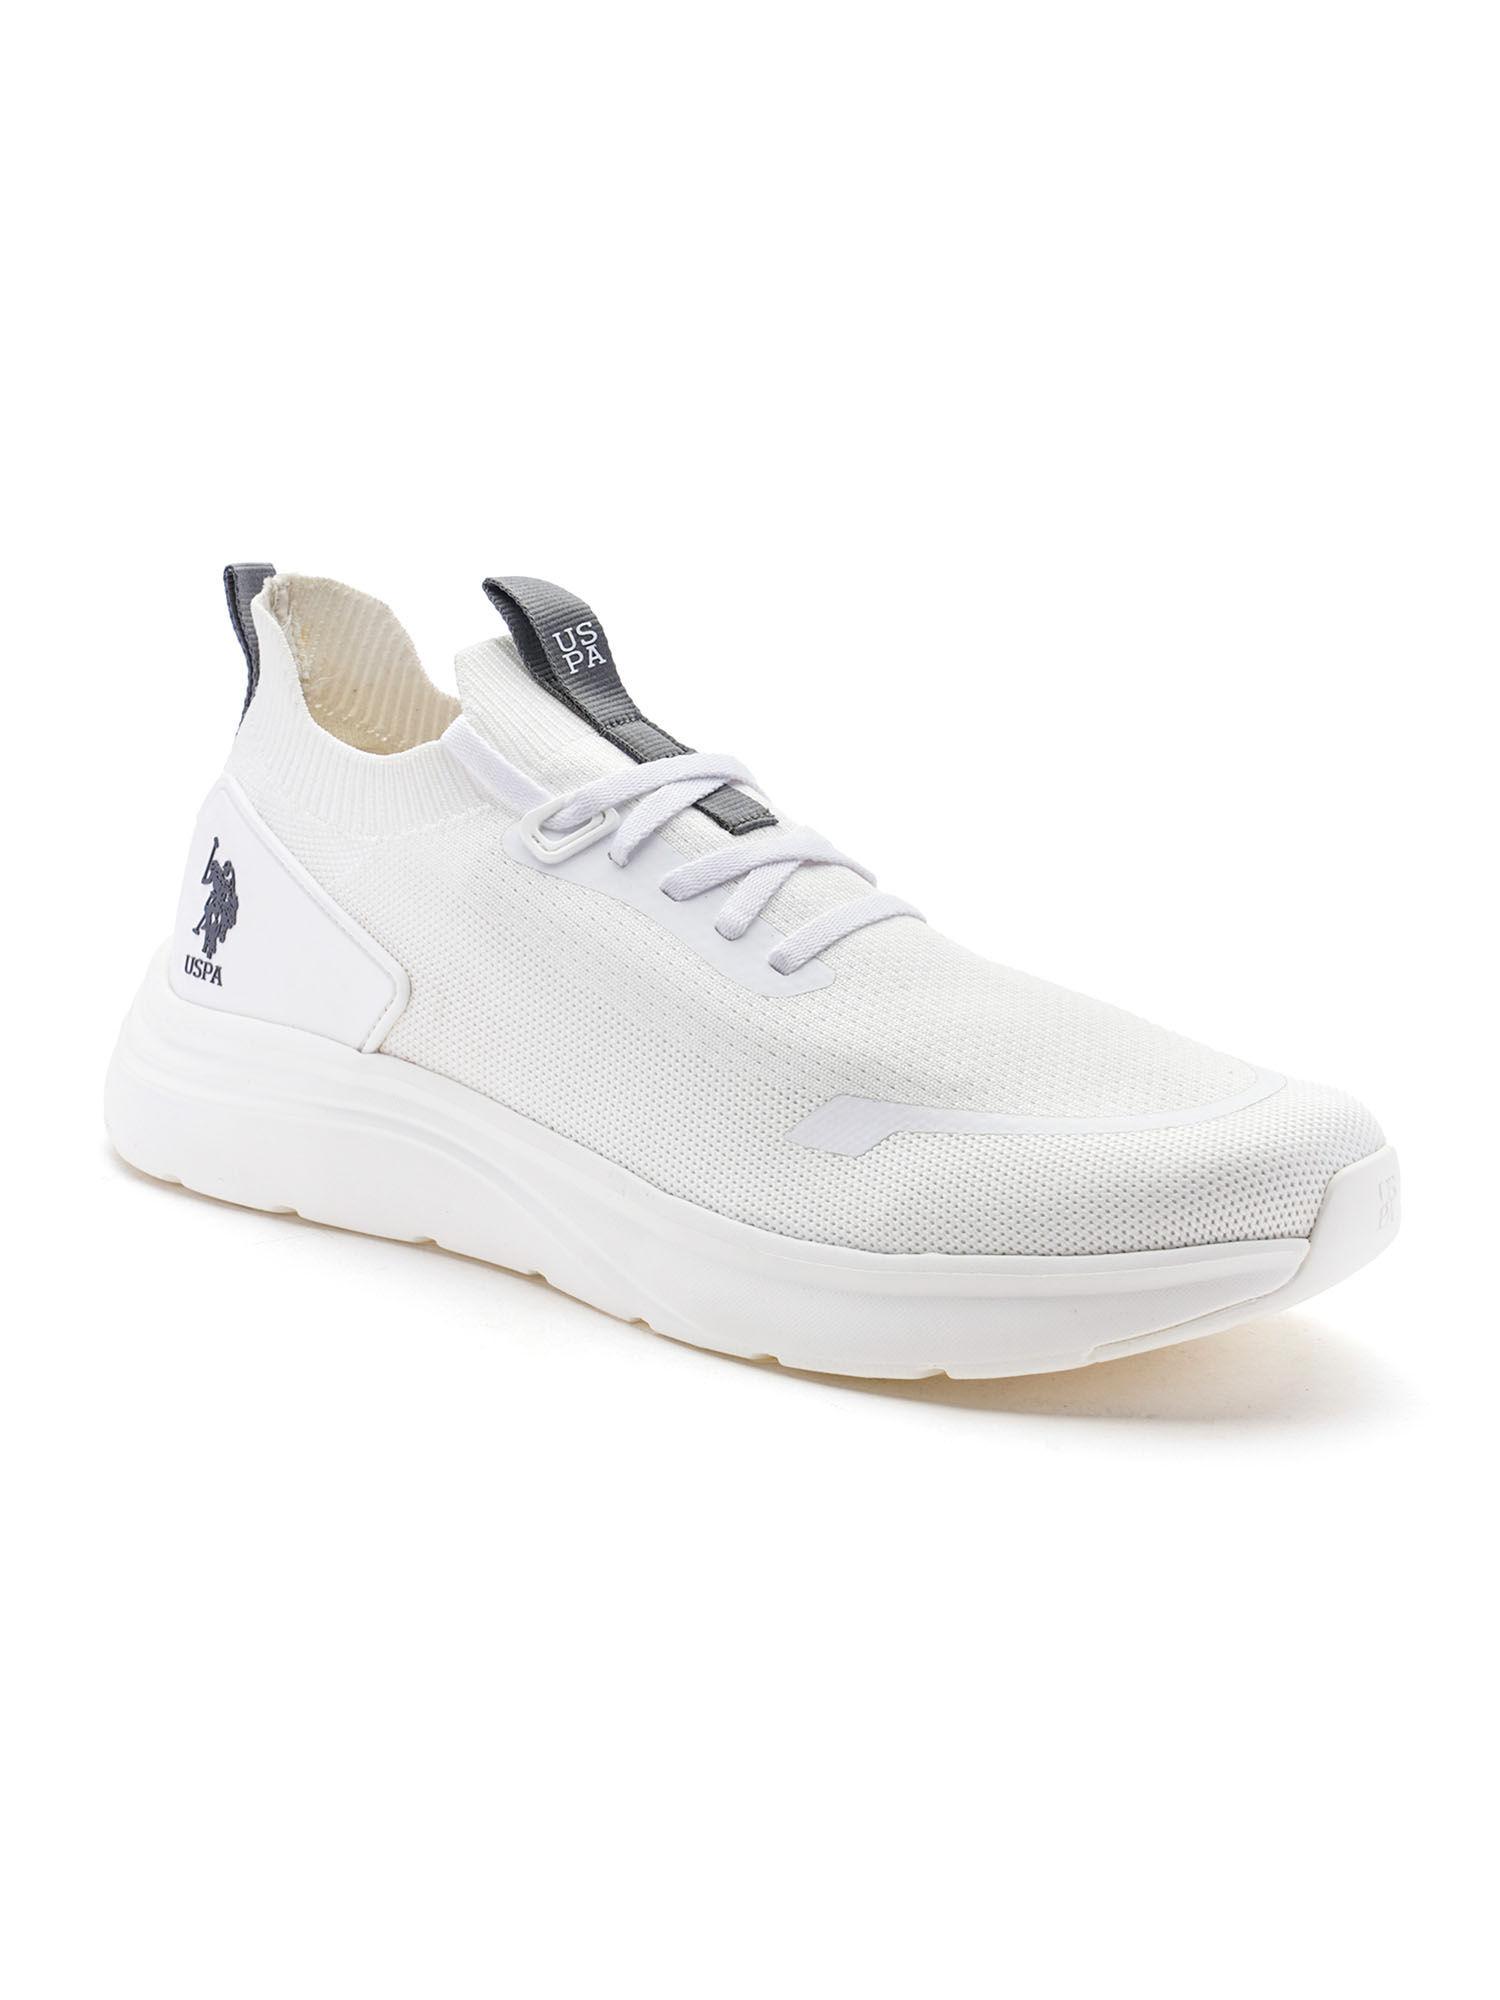 oxley 3.0 men white walking shoes